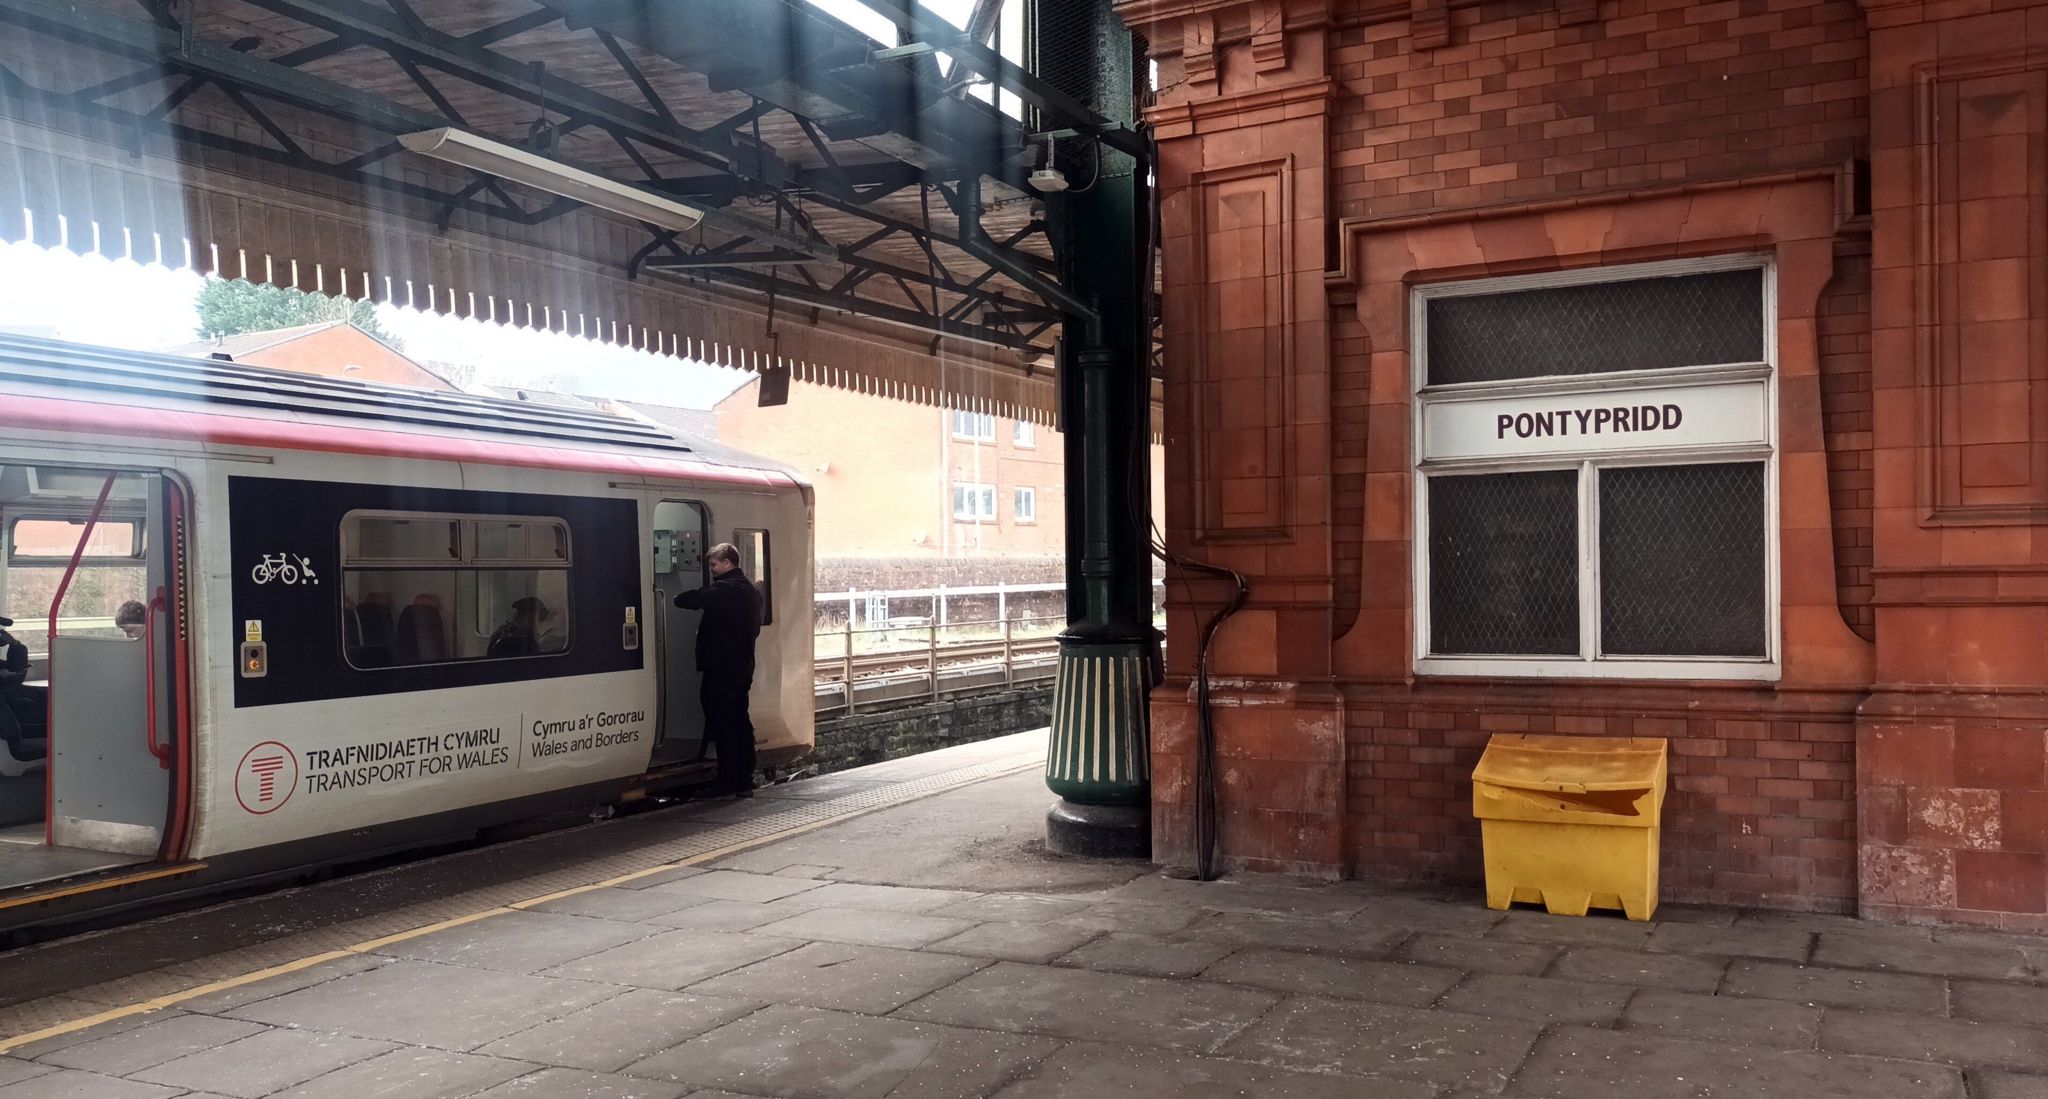 A picture of Pontypridd station